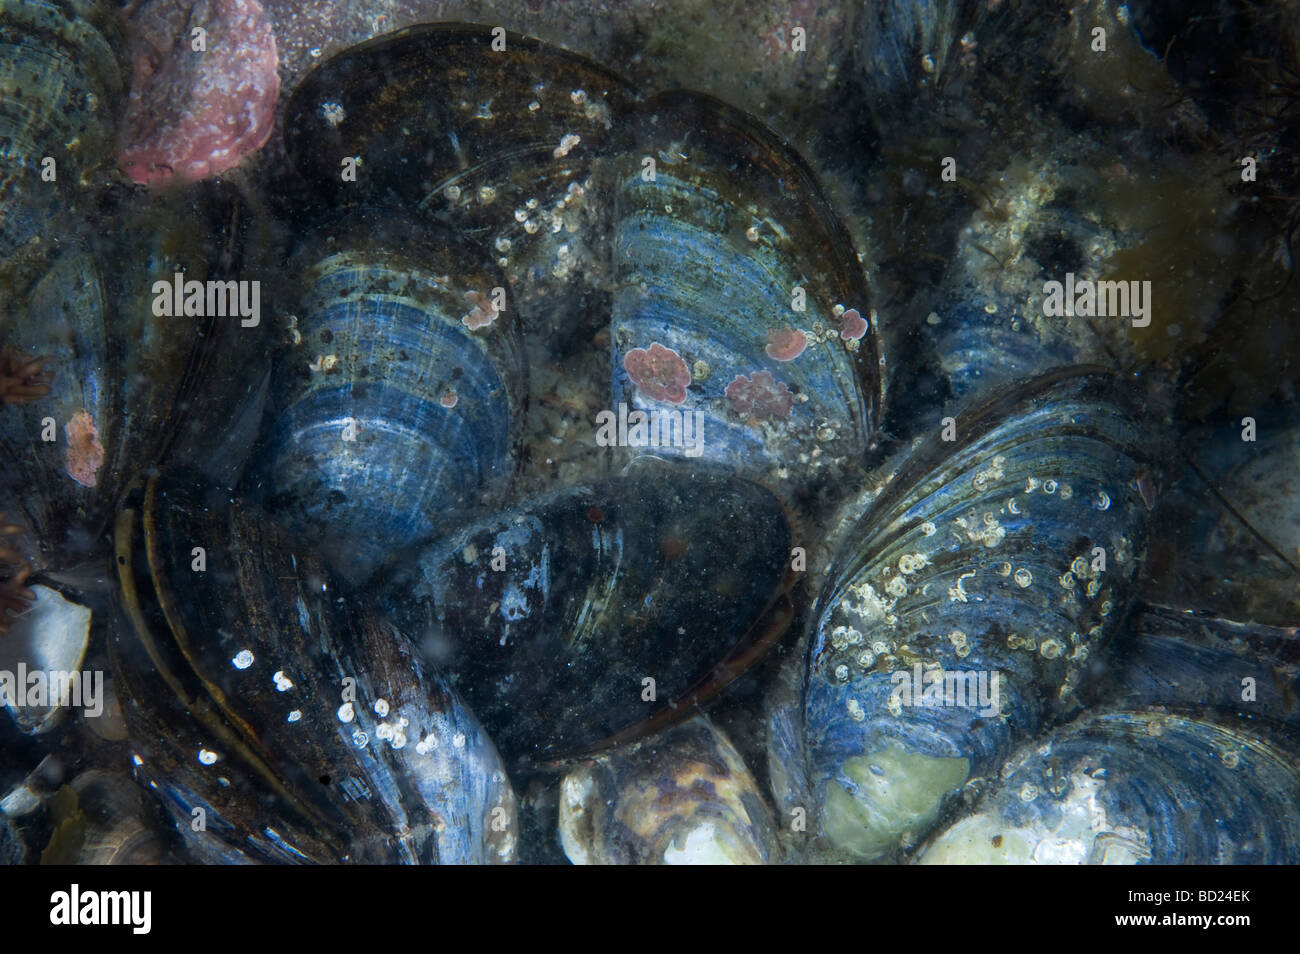 Common mussels (Mytilus edulis) Underwater, Sweden Stock Photo